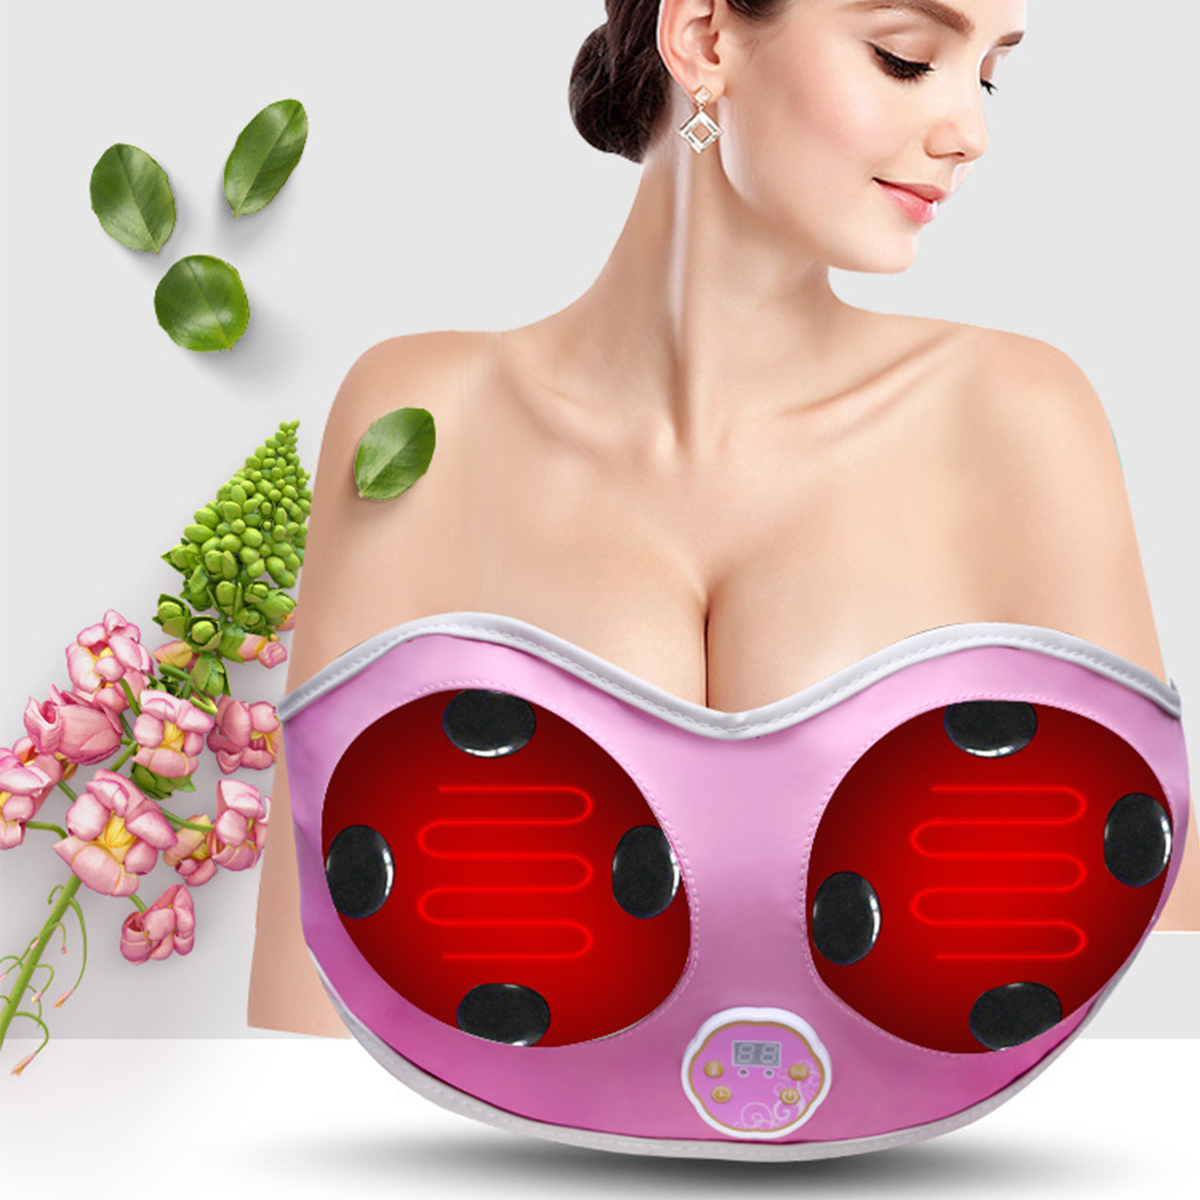 220V Electronic Breast Enhancement Massager